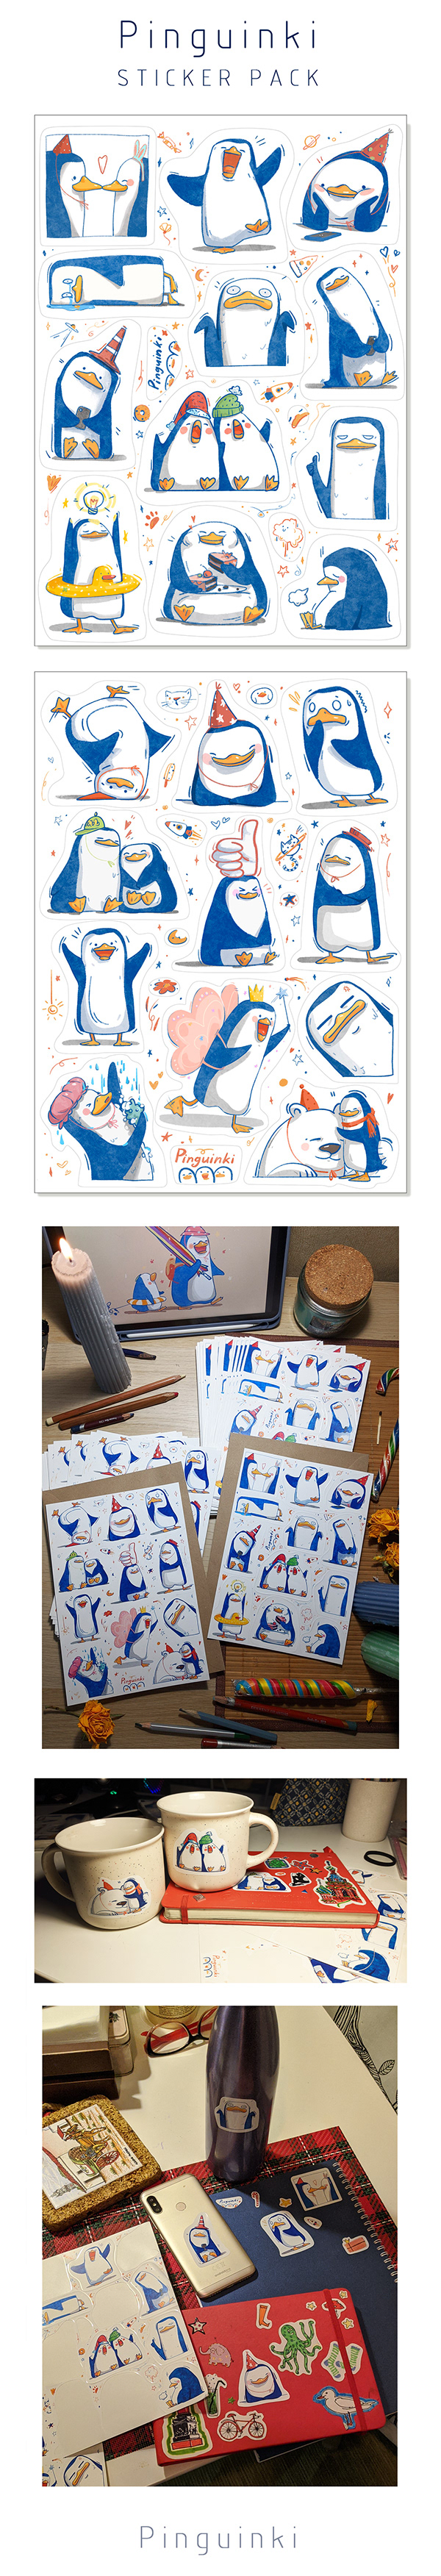 Pinguinki Sticker Pack